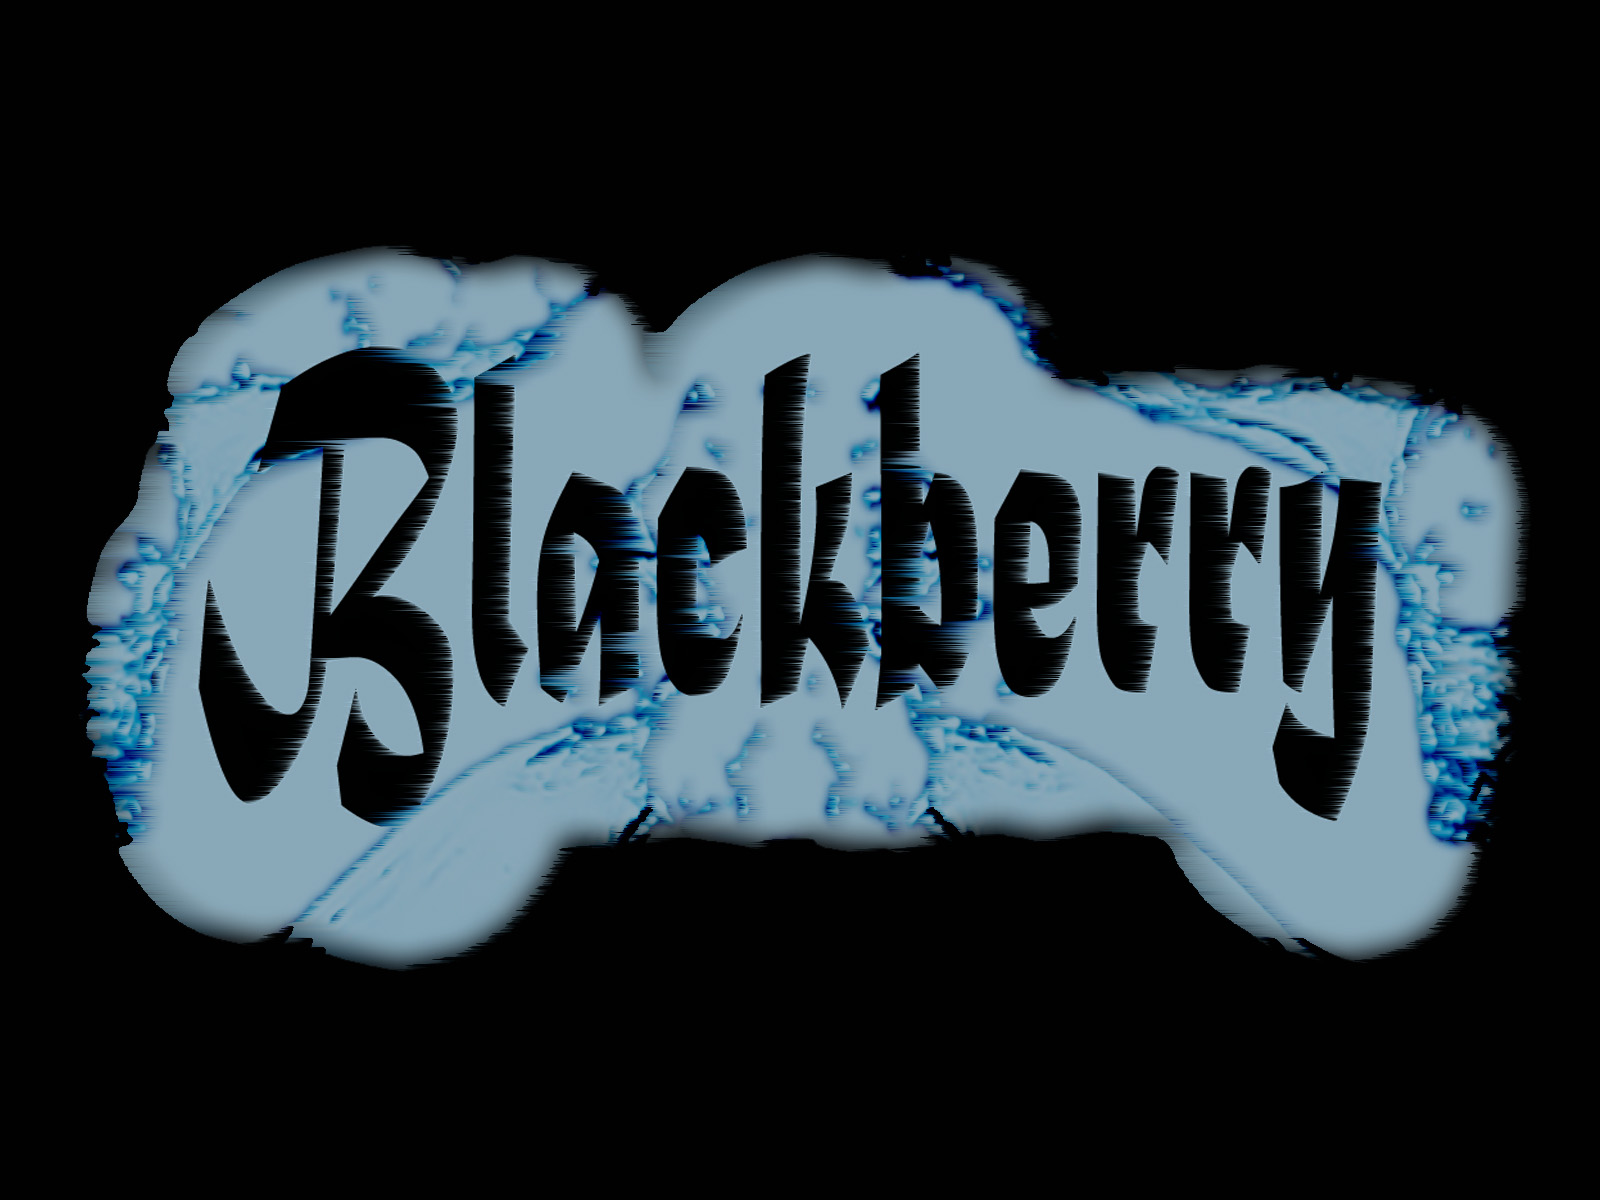 Blackberry Wallpaper Downloads Wallpapersafari